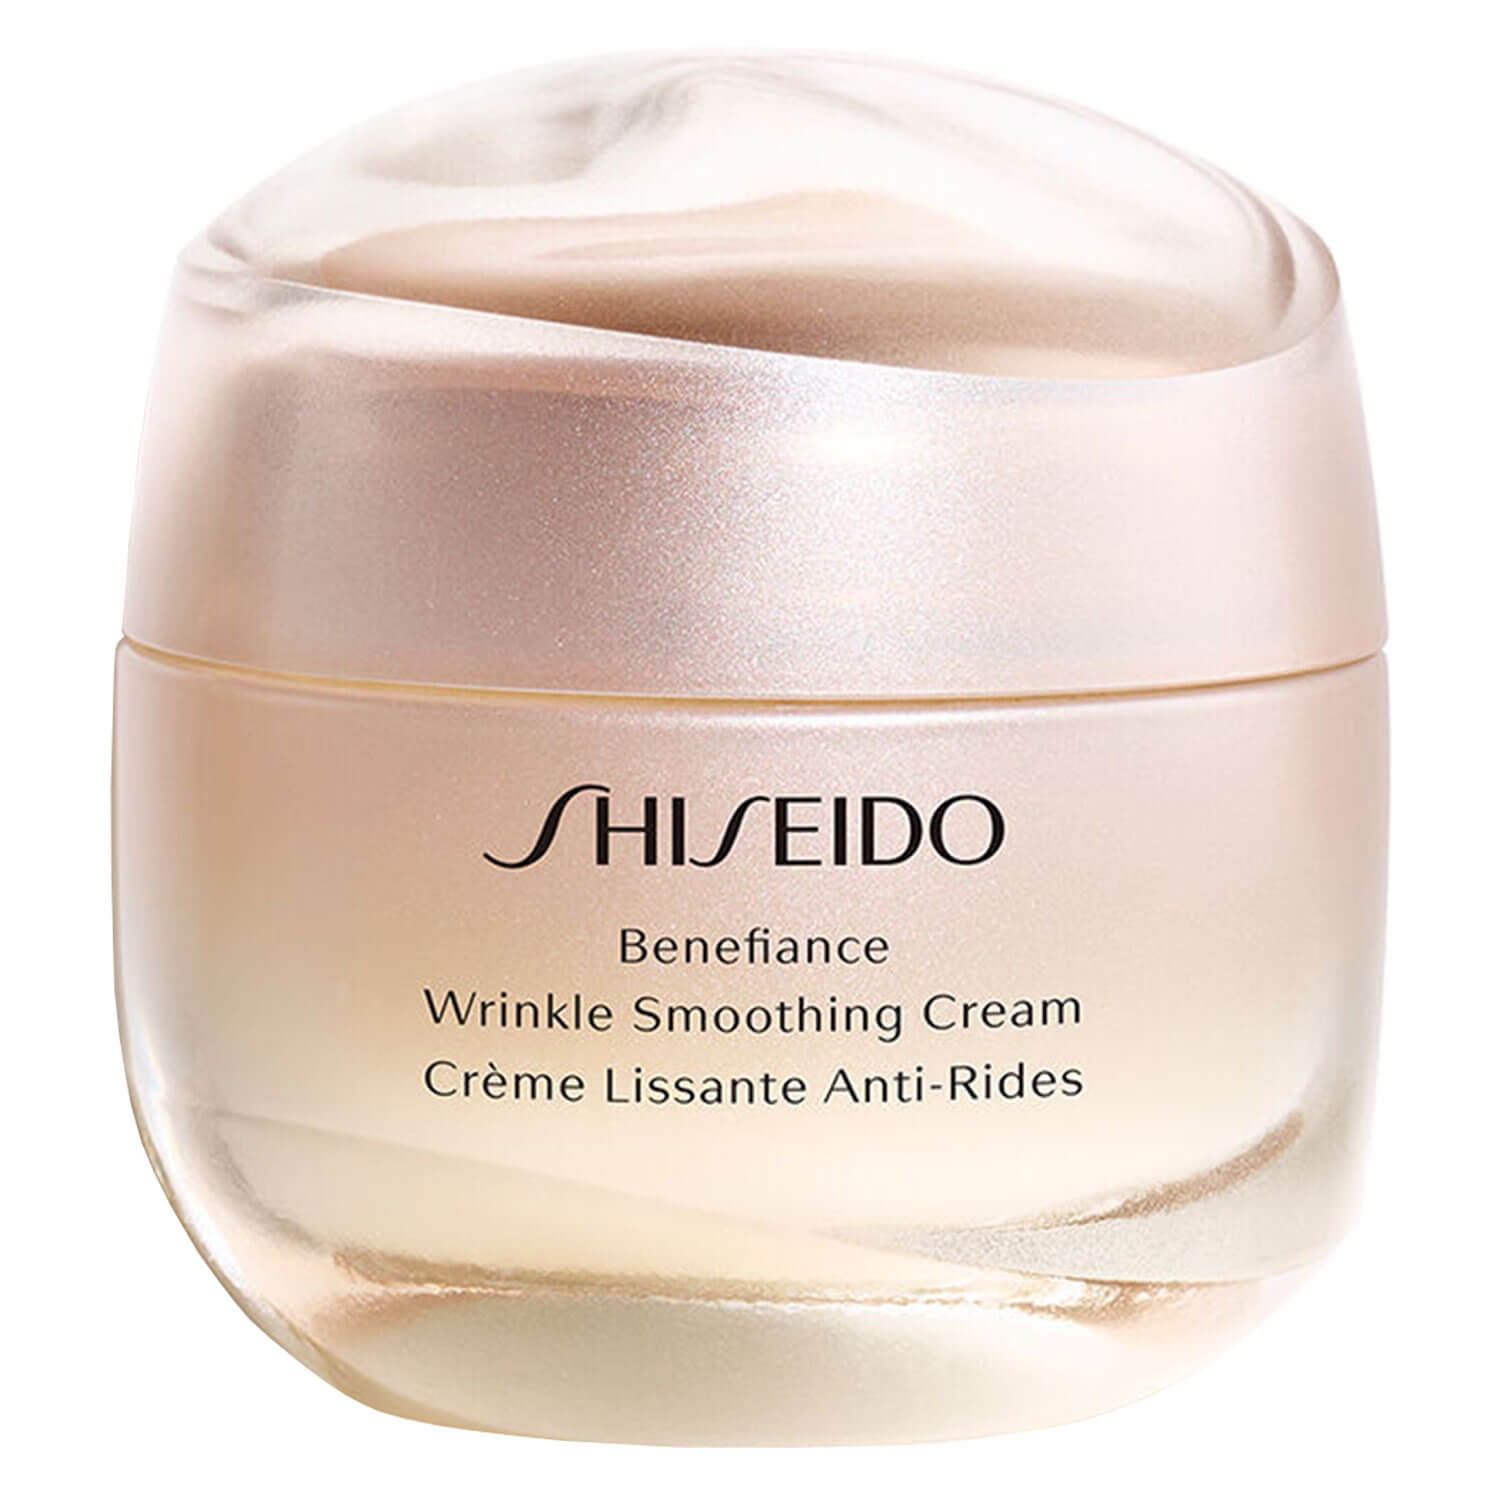 Product image from Benefiance - Wrinkle Smoothing Cream